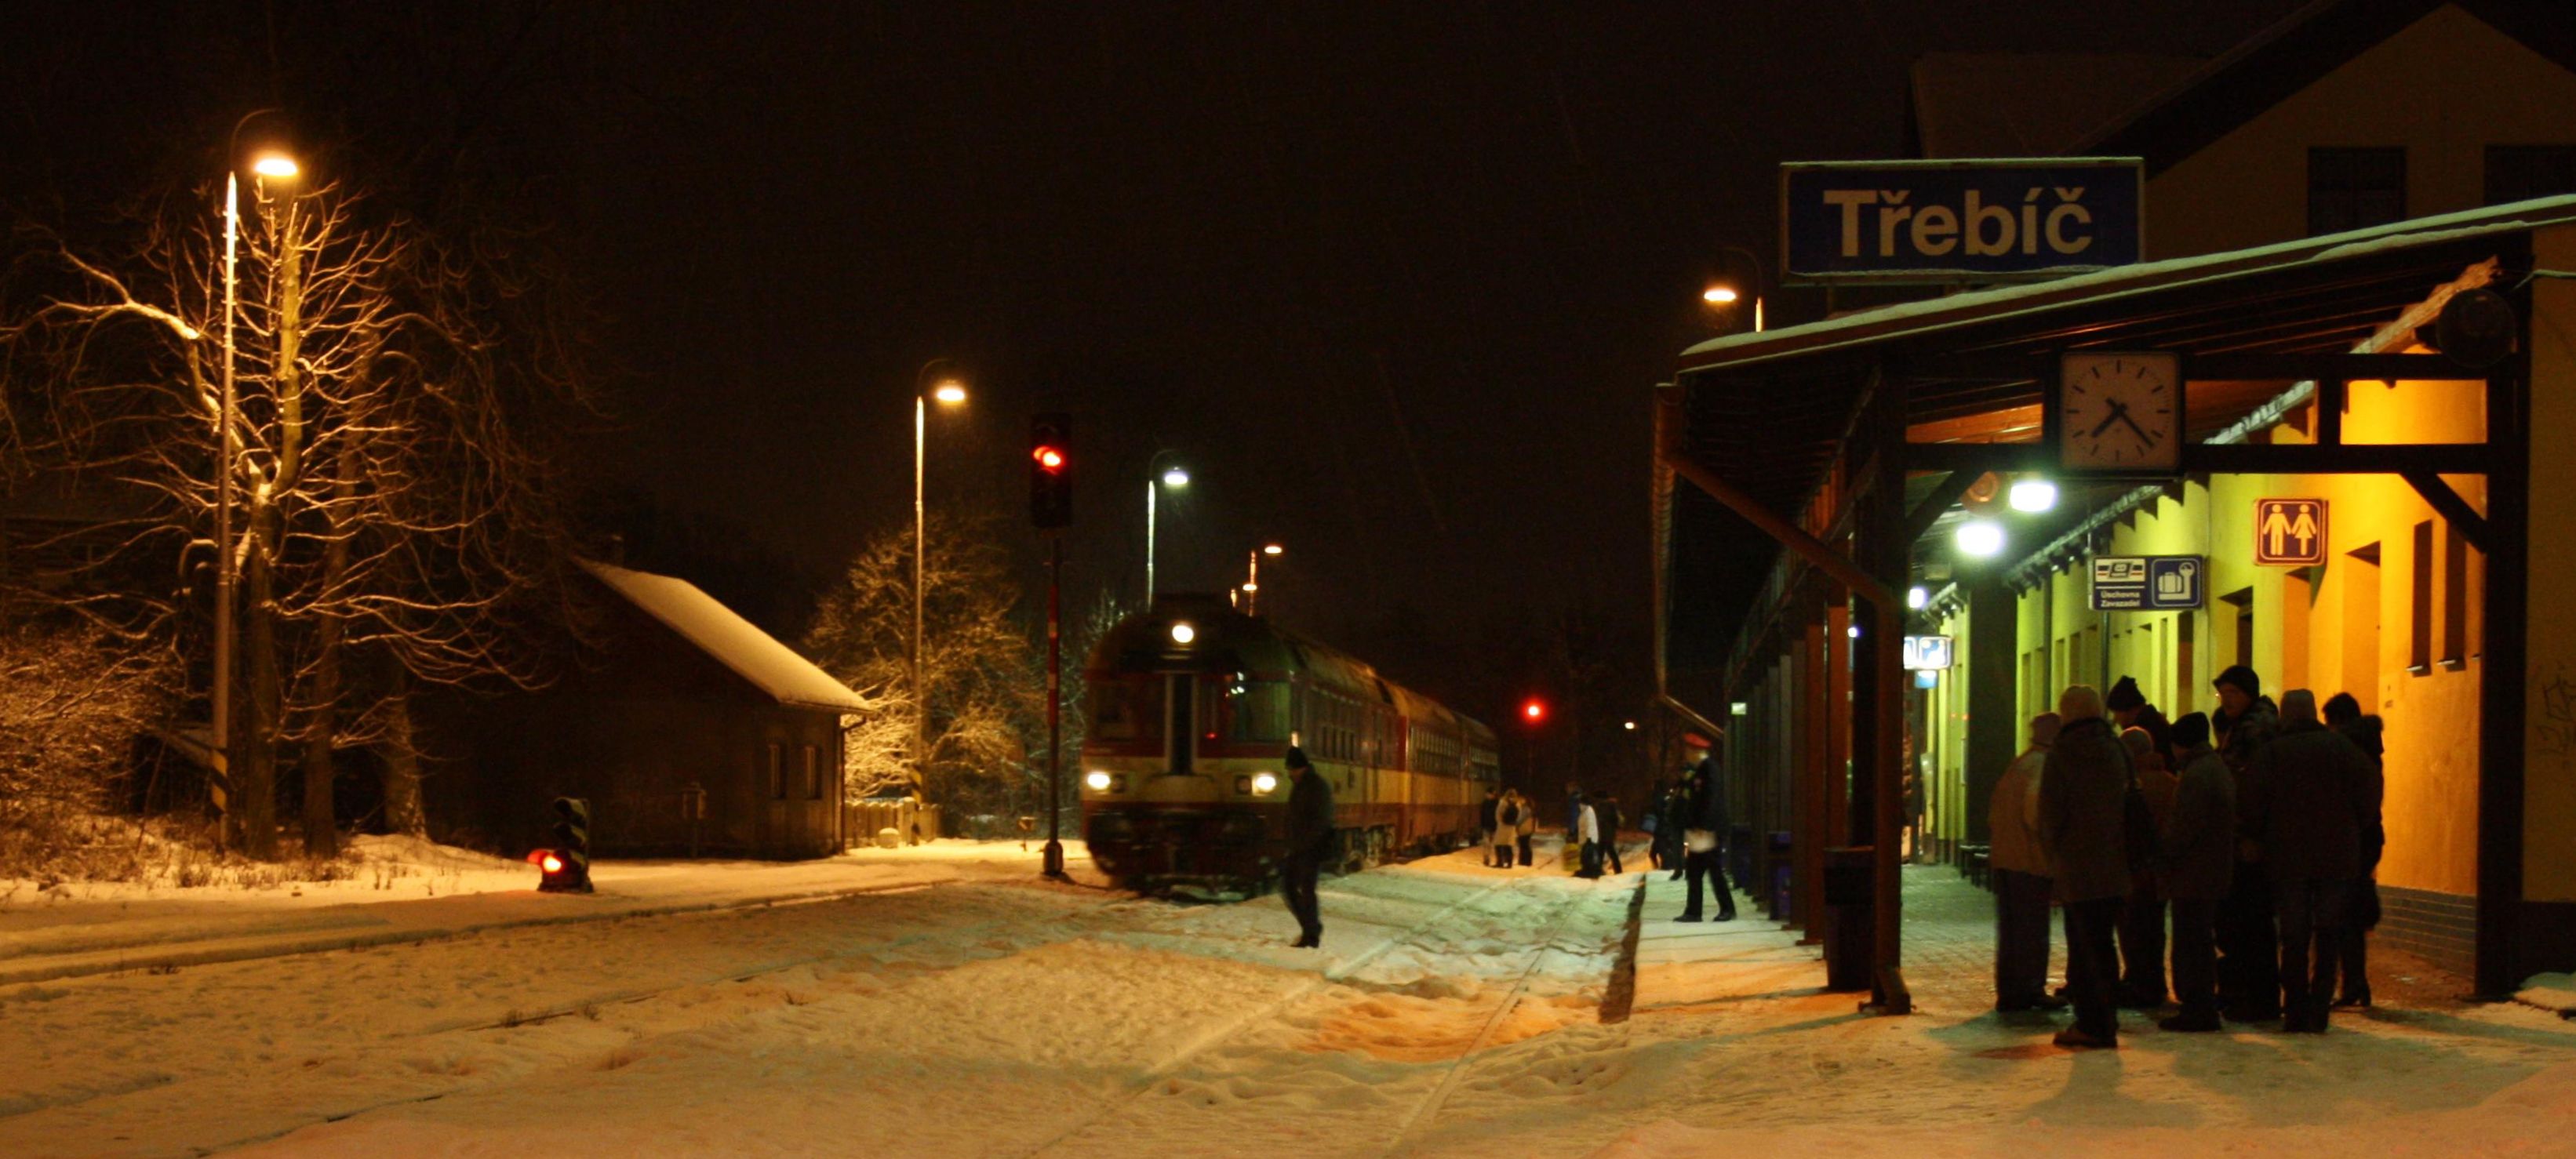 File:Train station with arriving train at night in Třebíč, Czech ...